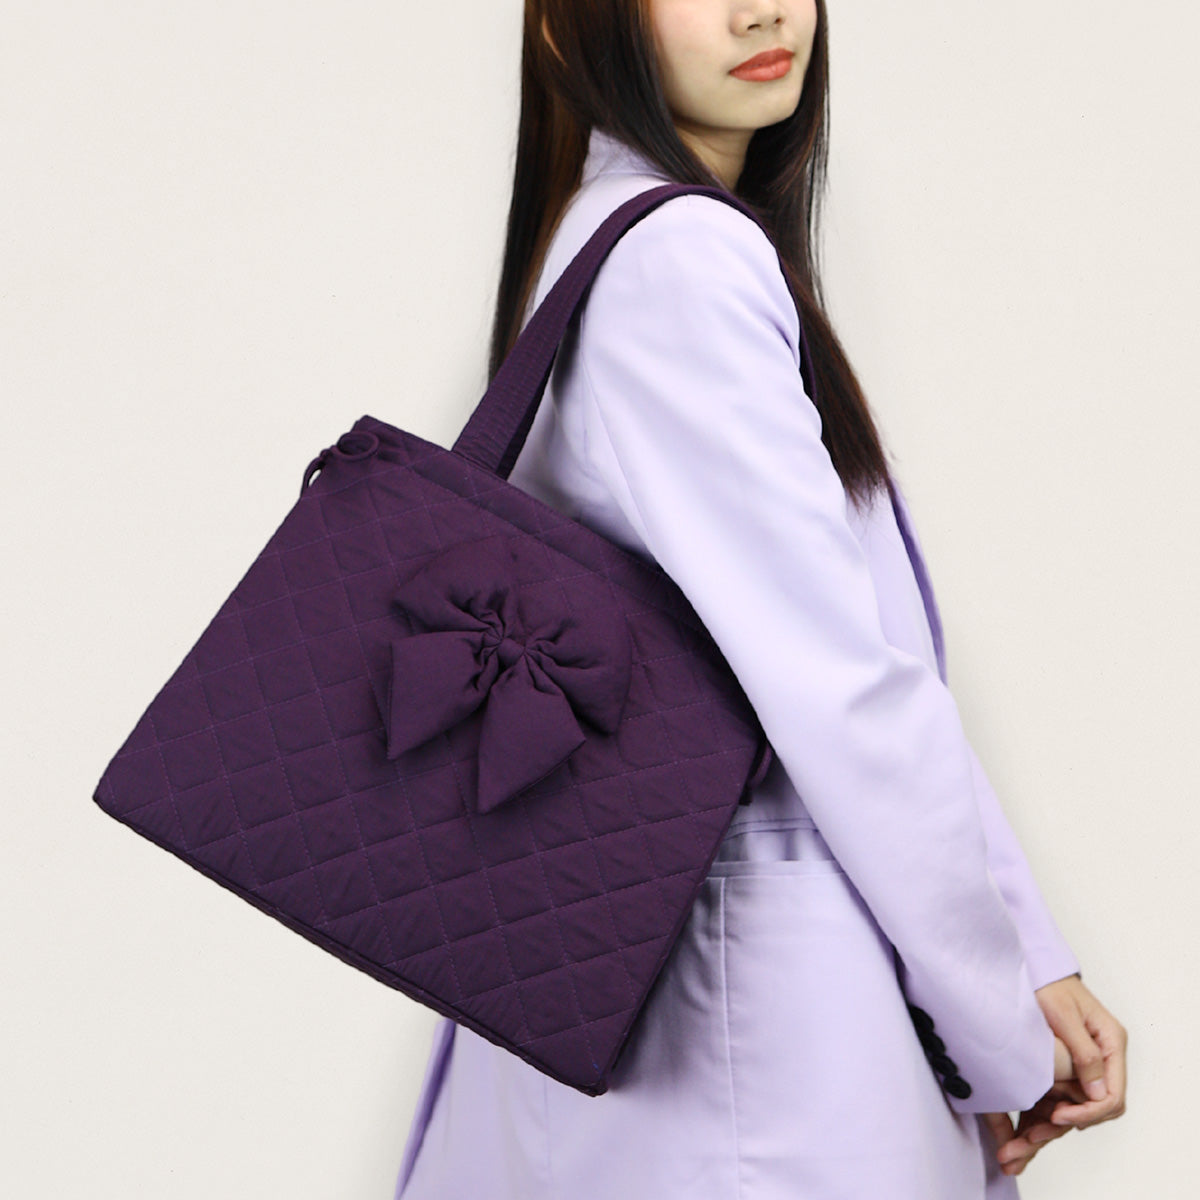 THB shop online Naraya handbag pastel dot printed pattern sling bag -   THB